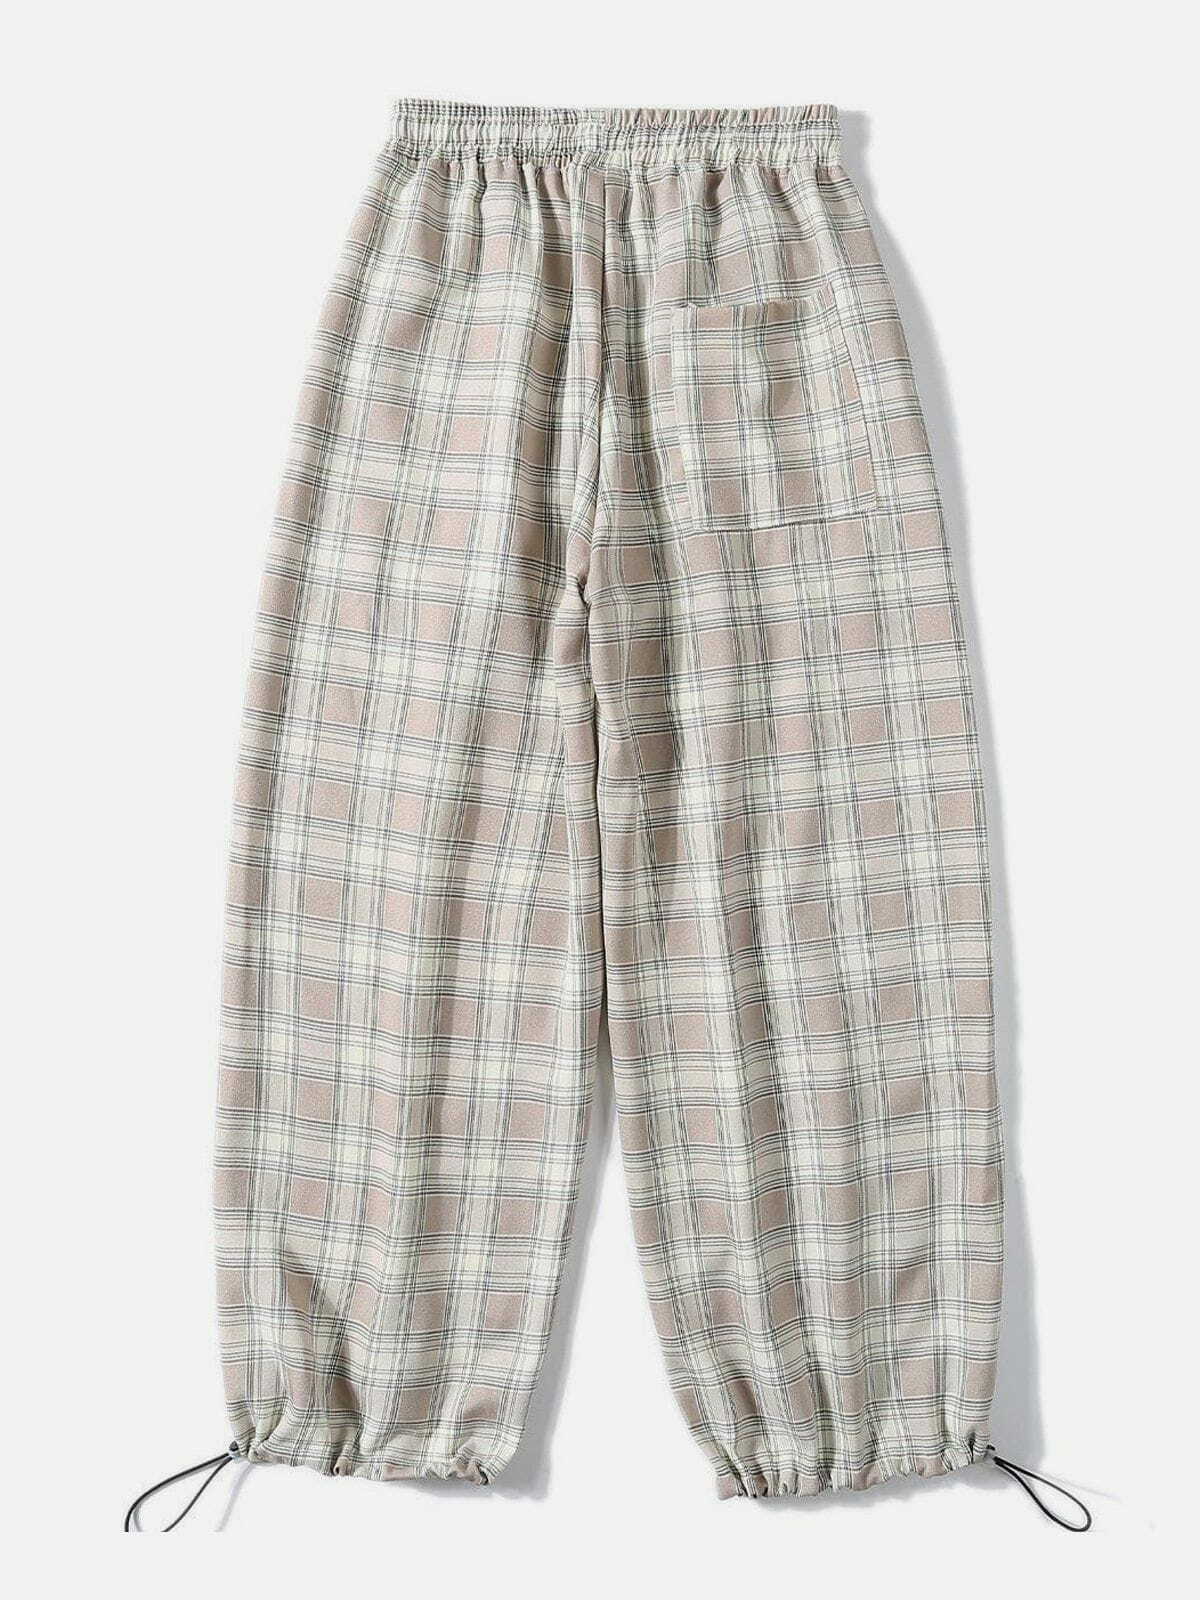 plaid drawstring casual pants urban chic streetwear 5260